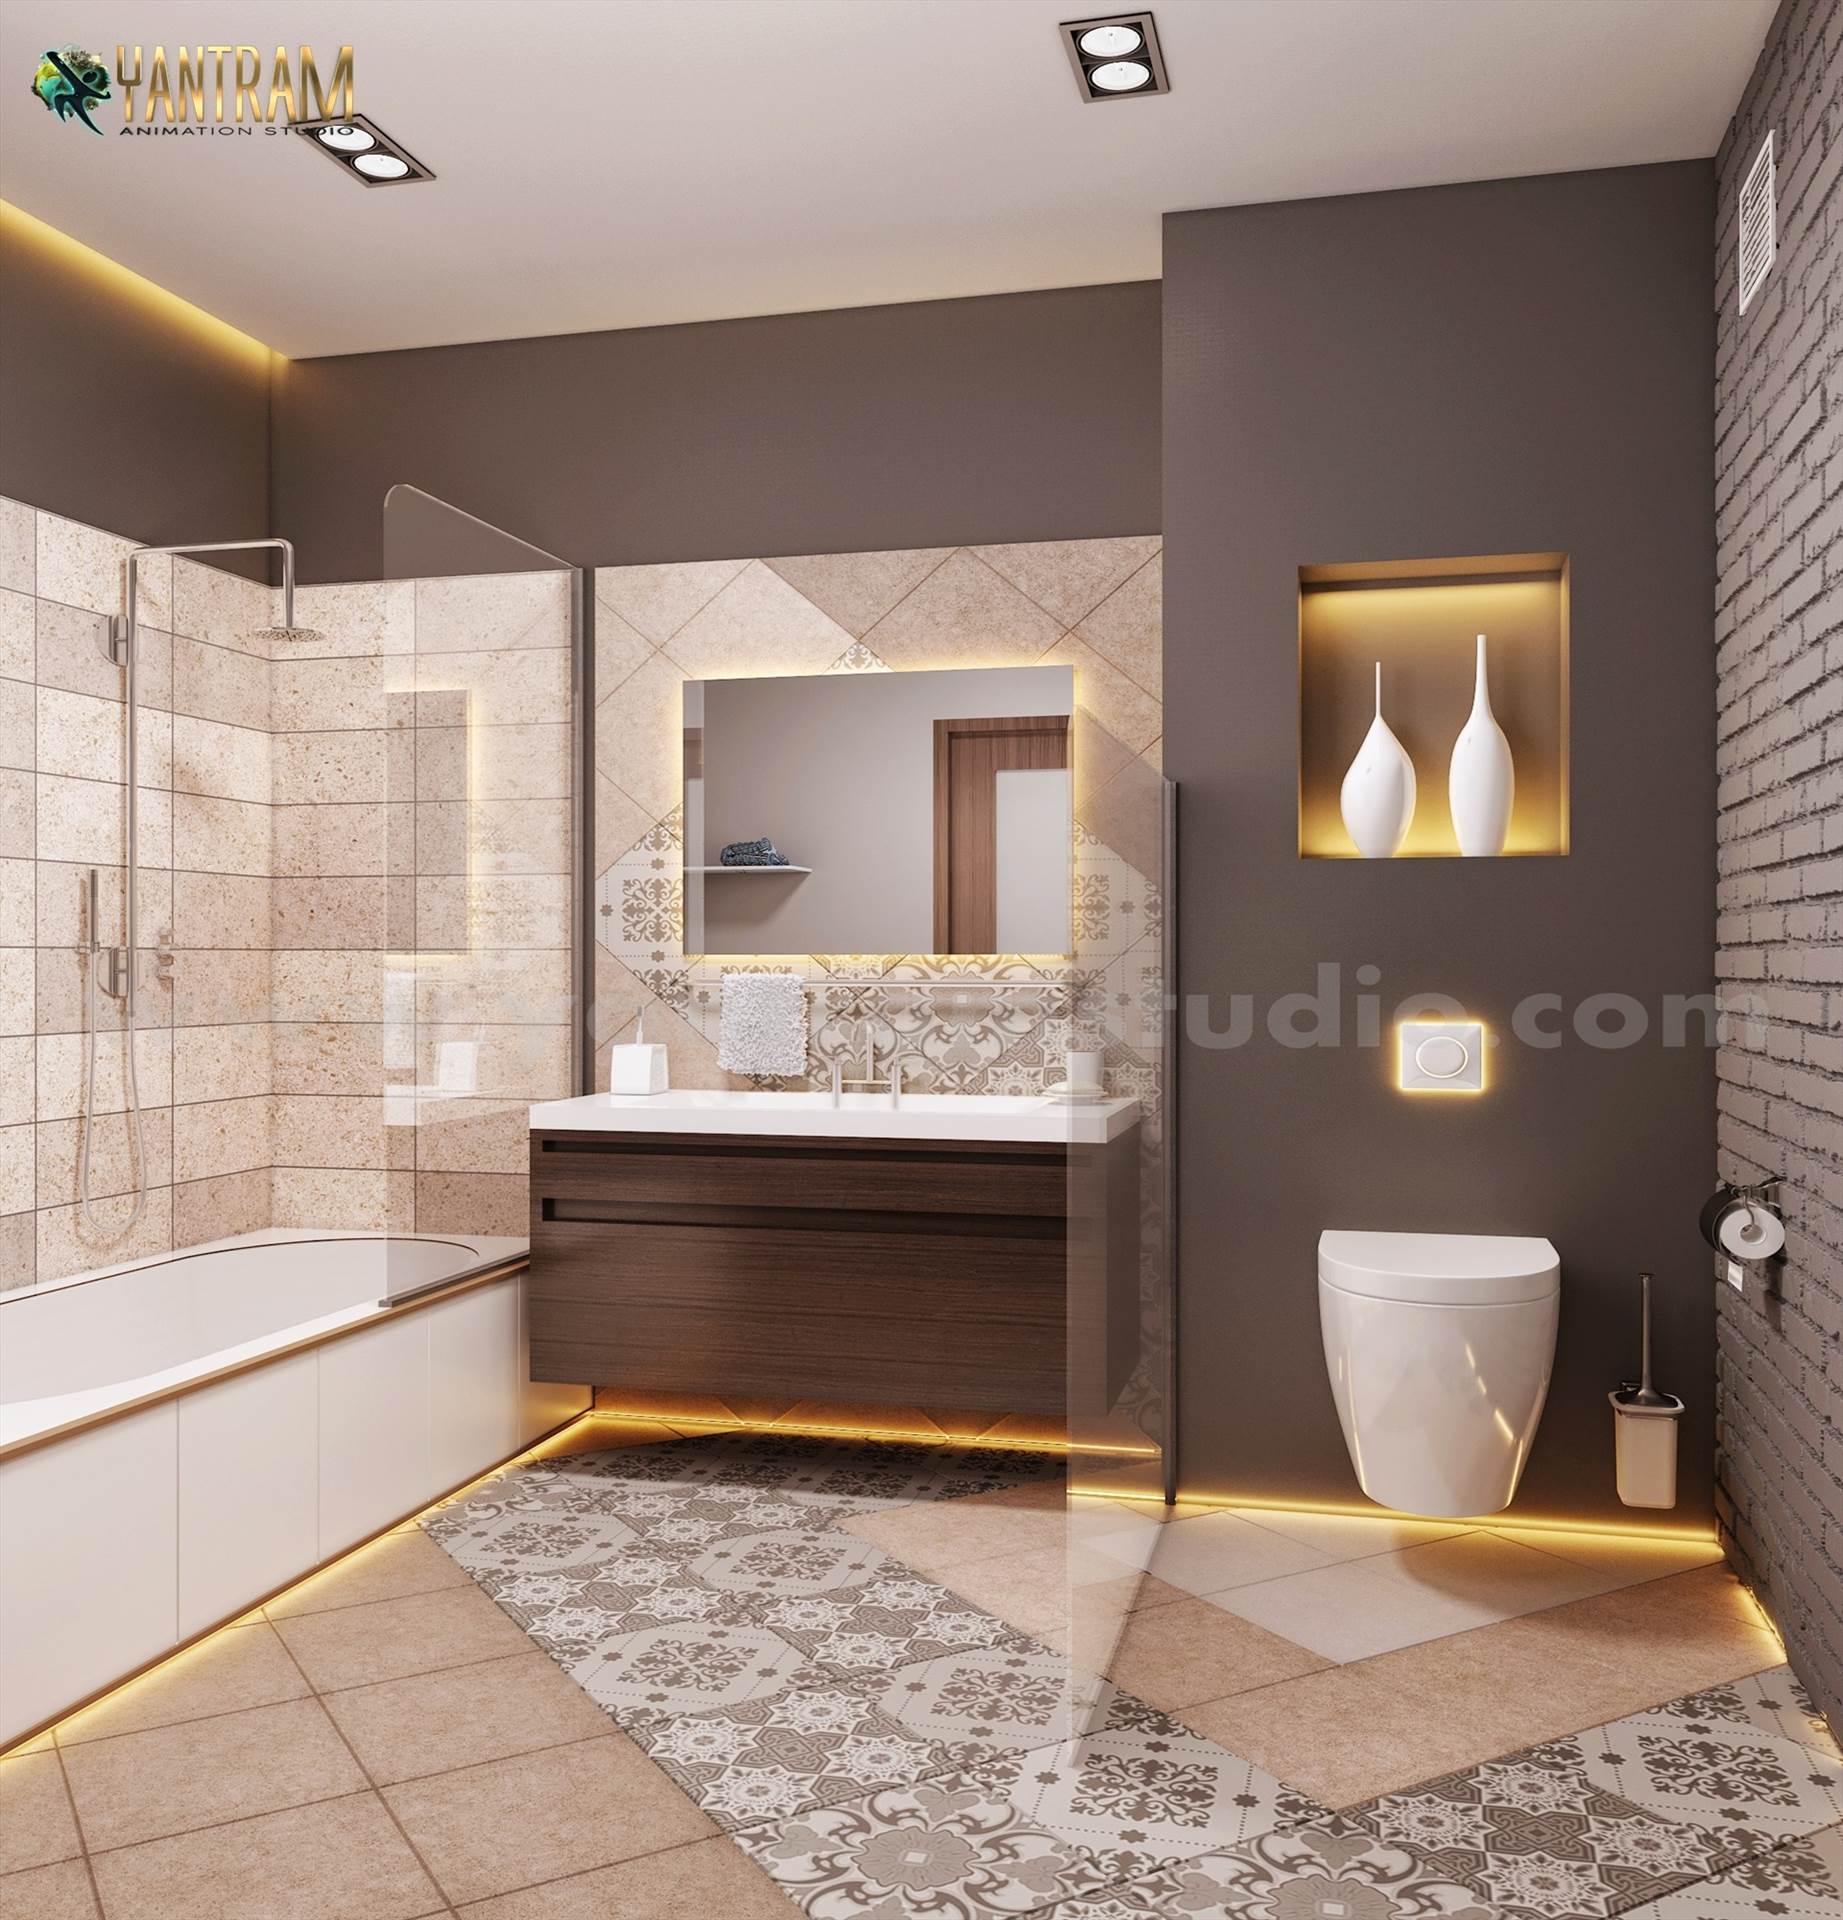 Contemporary Bathroom Decor Style Interior Design for Home by Architectural Animation Services, Qatar - Doha001.jpg -  by Yantramarchitecturaldesignstudio